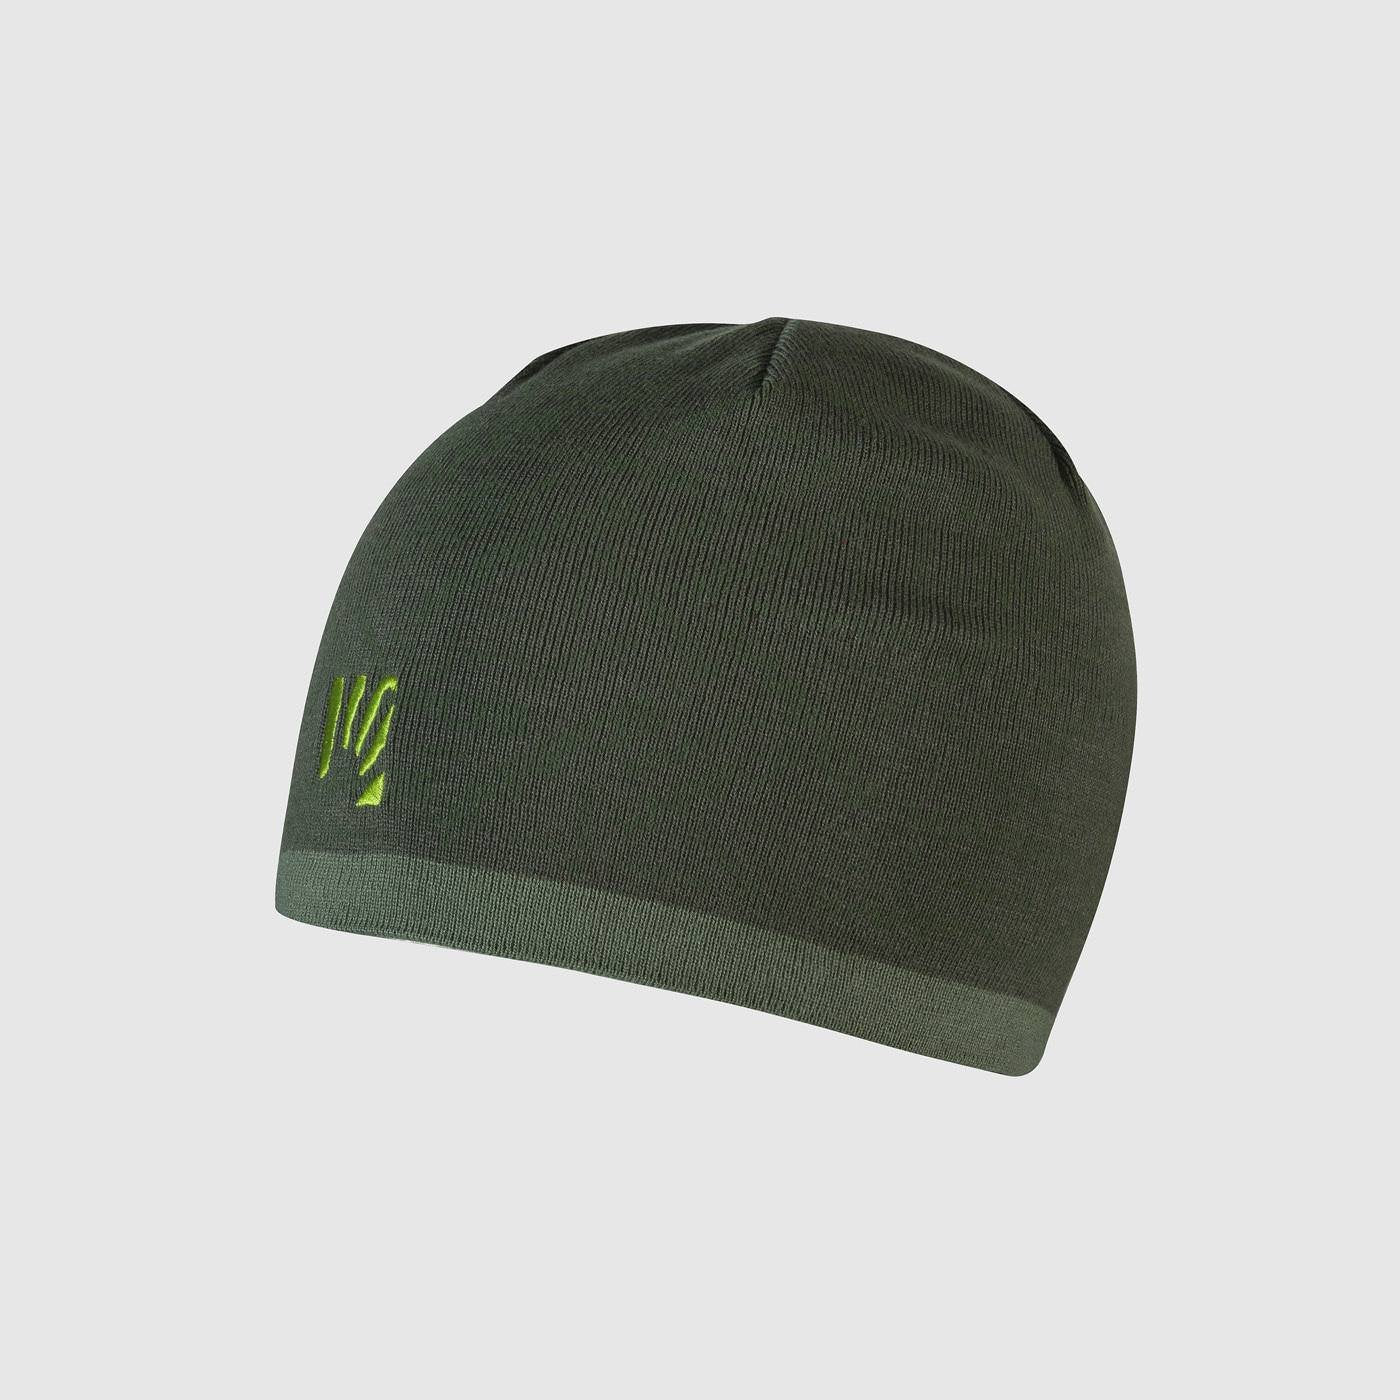 Green Fogoler cap